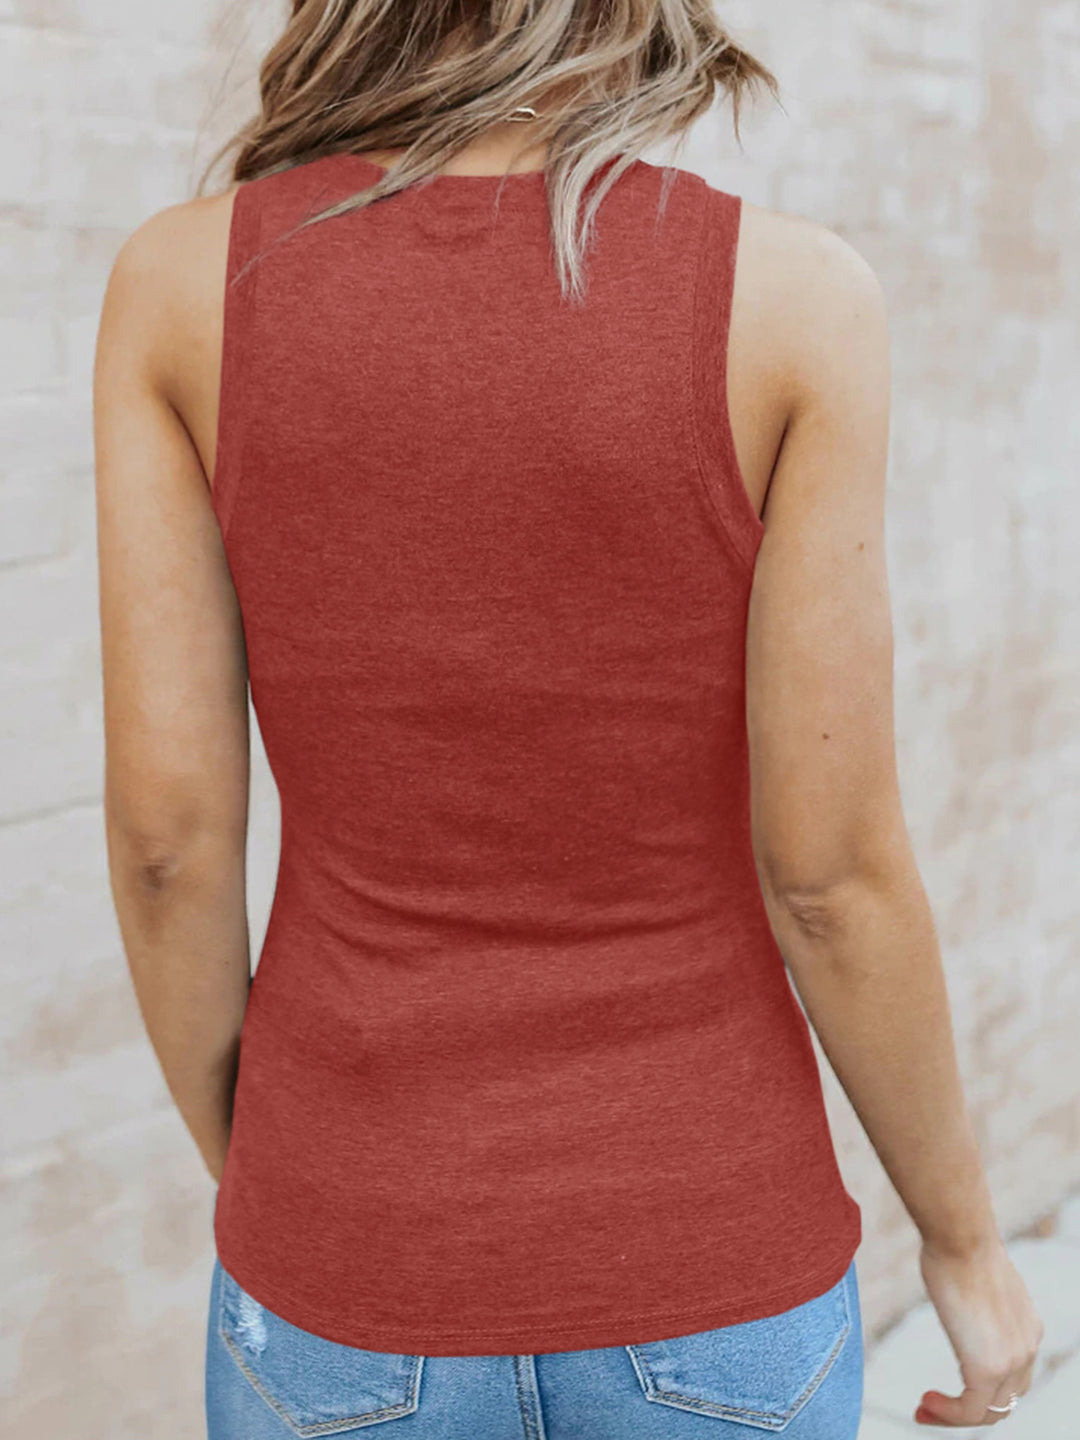 Women's Crewneck Tank Tops Summer Sleeveless Fitted Shirts